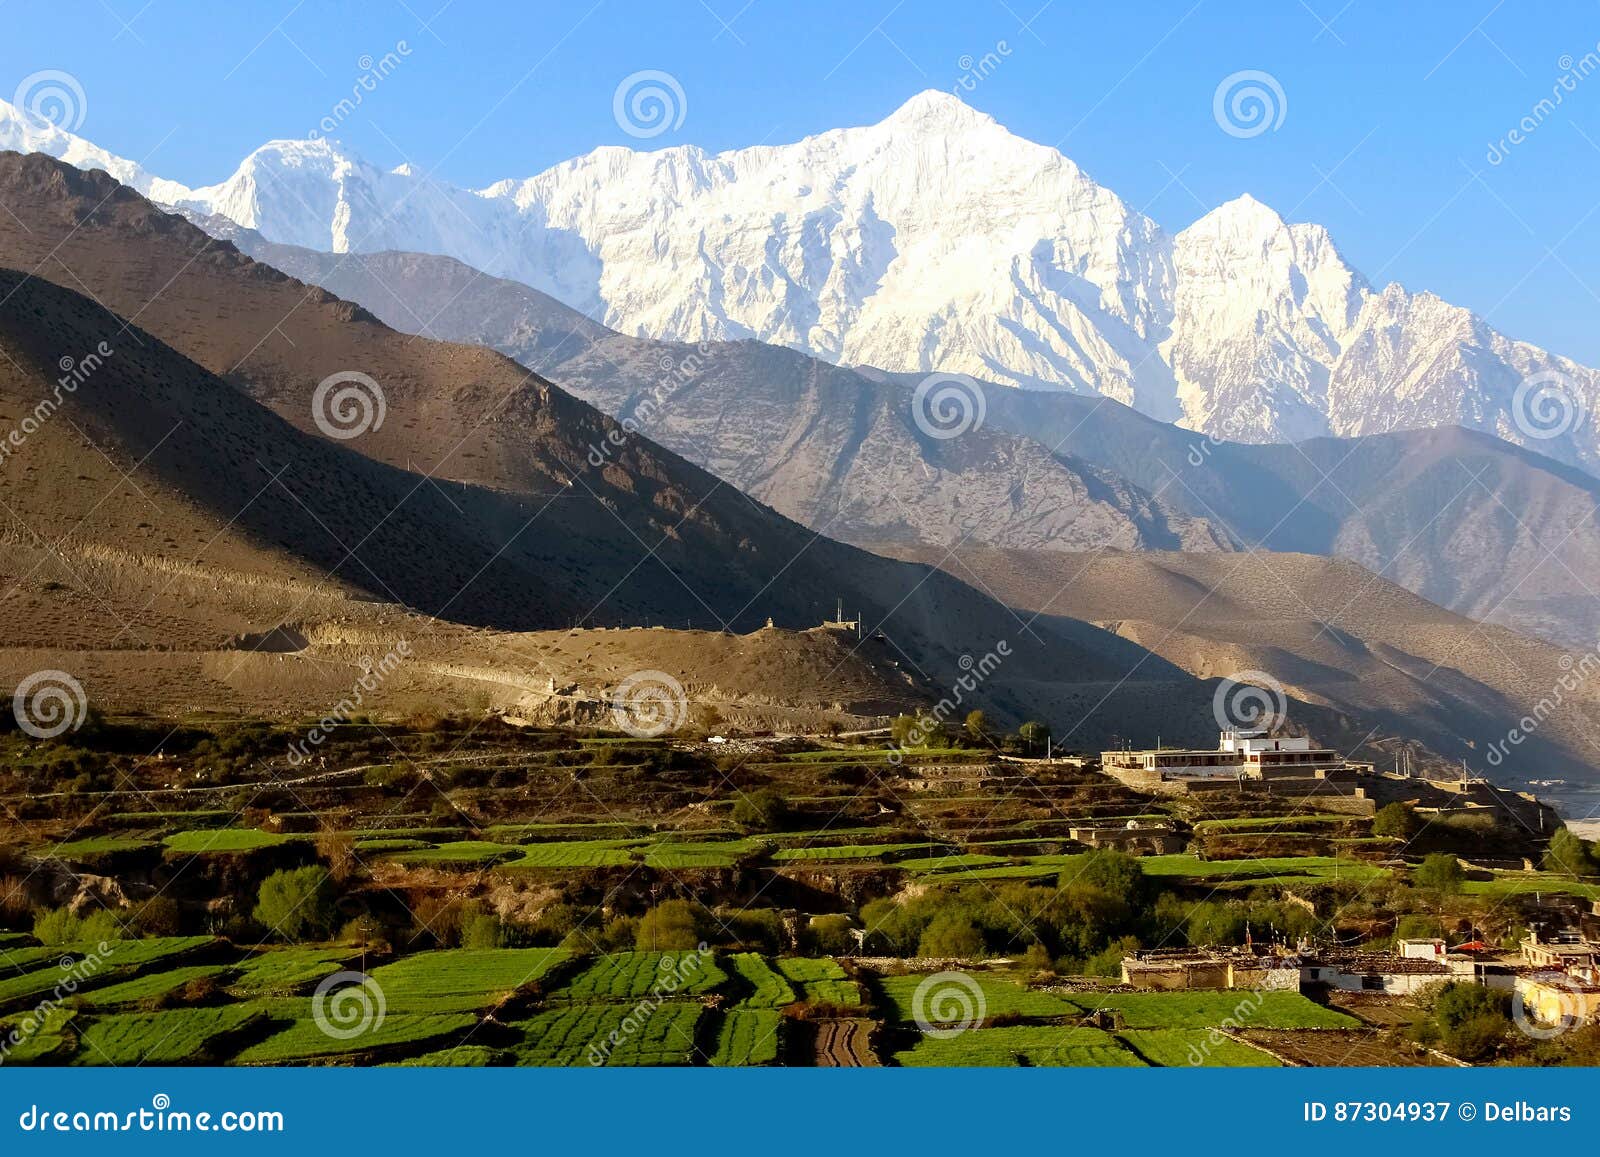 the village kagbeni in the himalayan mountains. kali gandaki river gorge. nepal